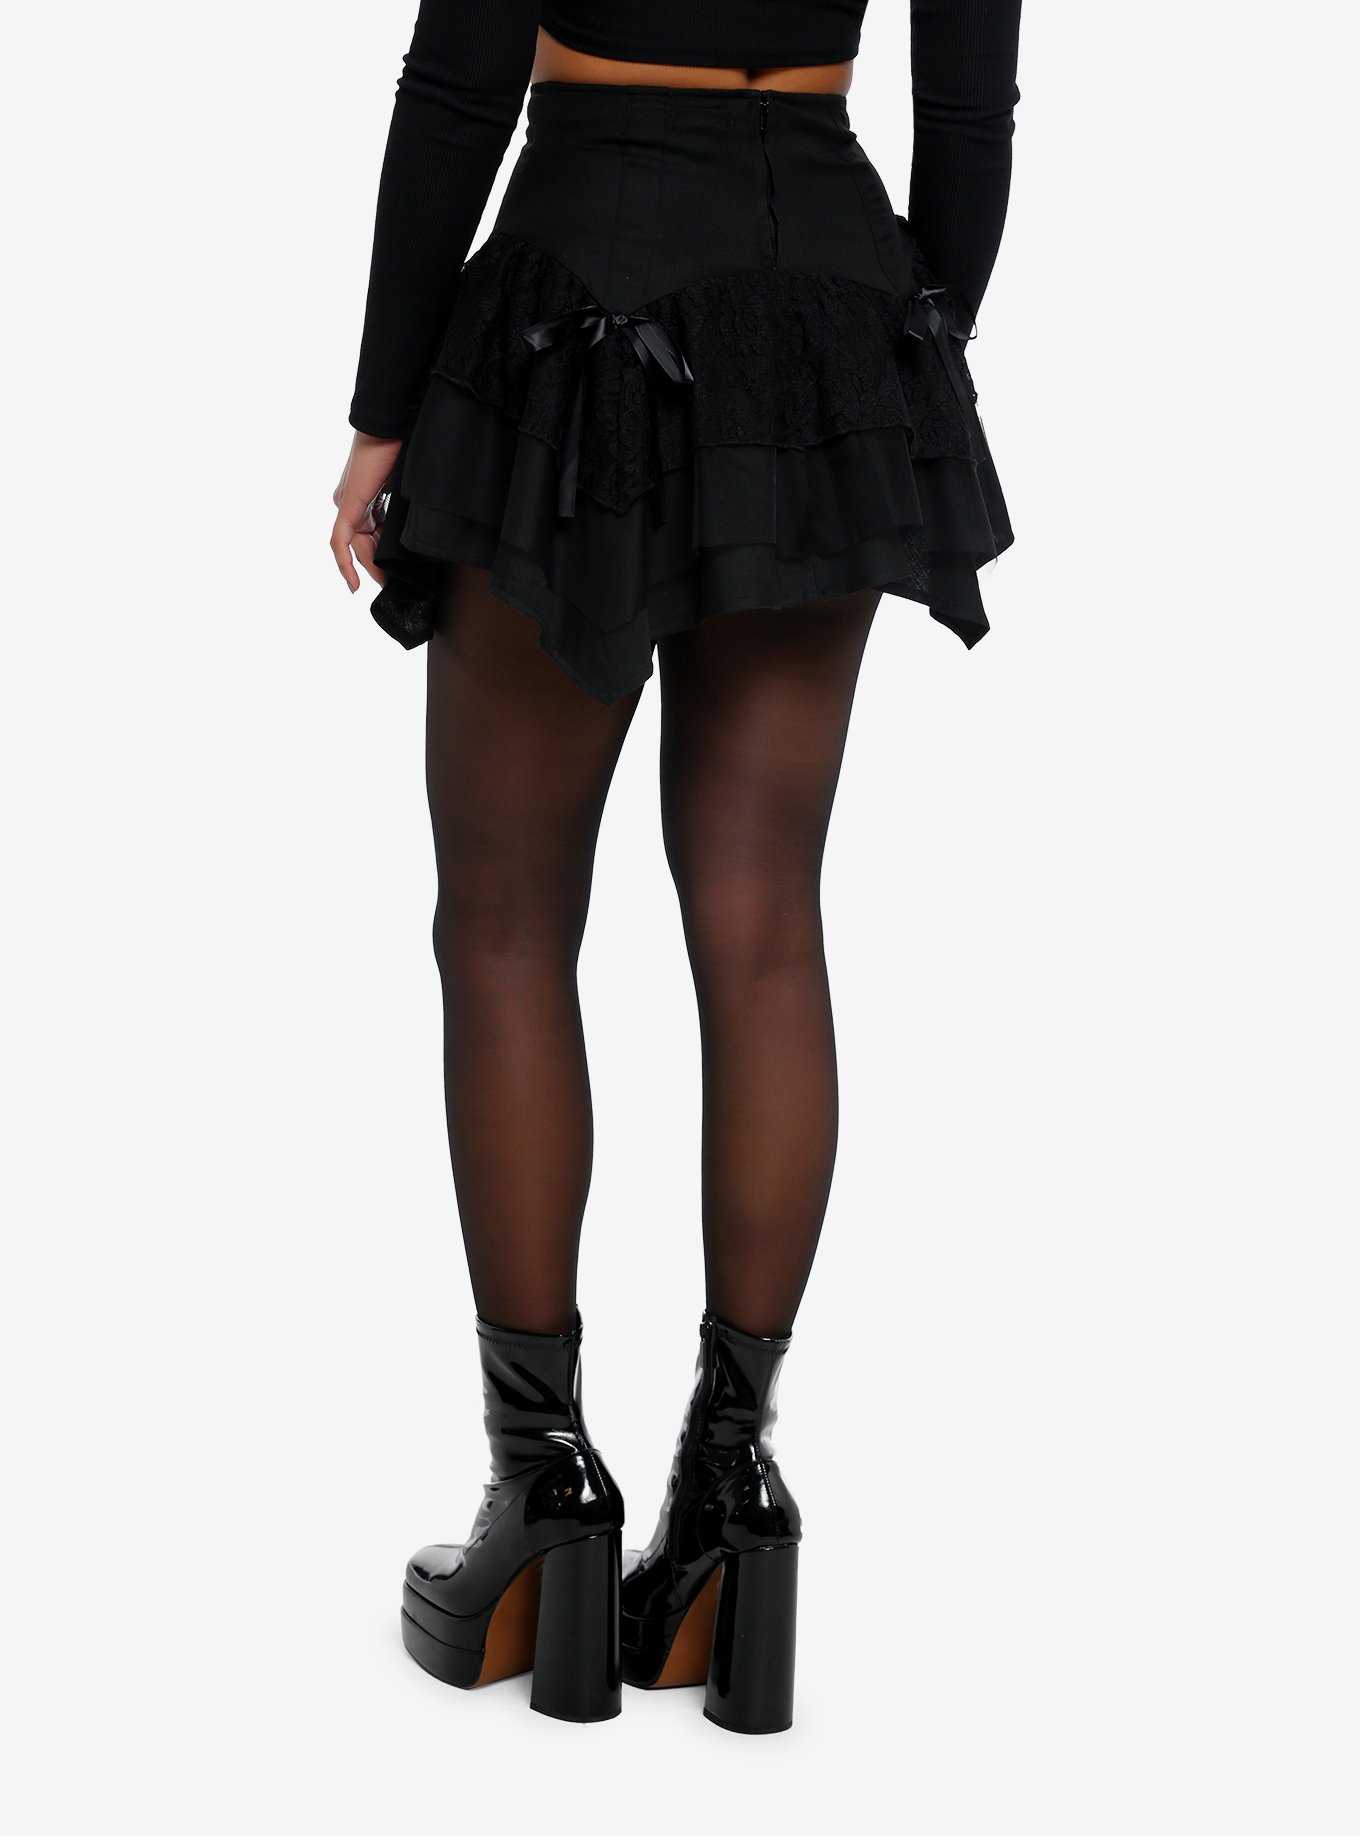 Black Lace-Up Tiered Hanky Hem Skirt, , hi-res